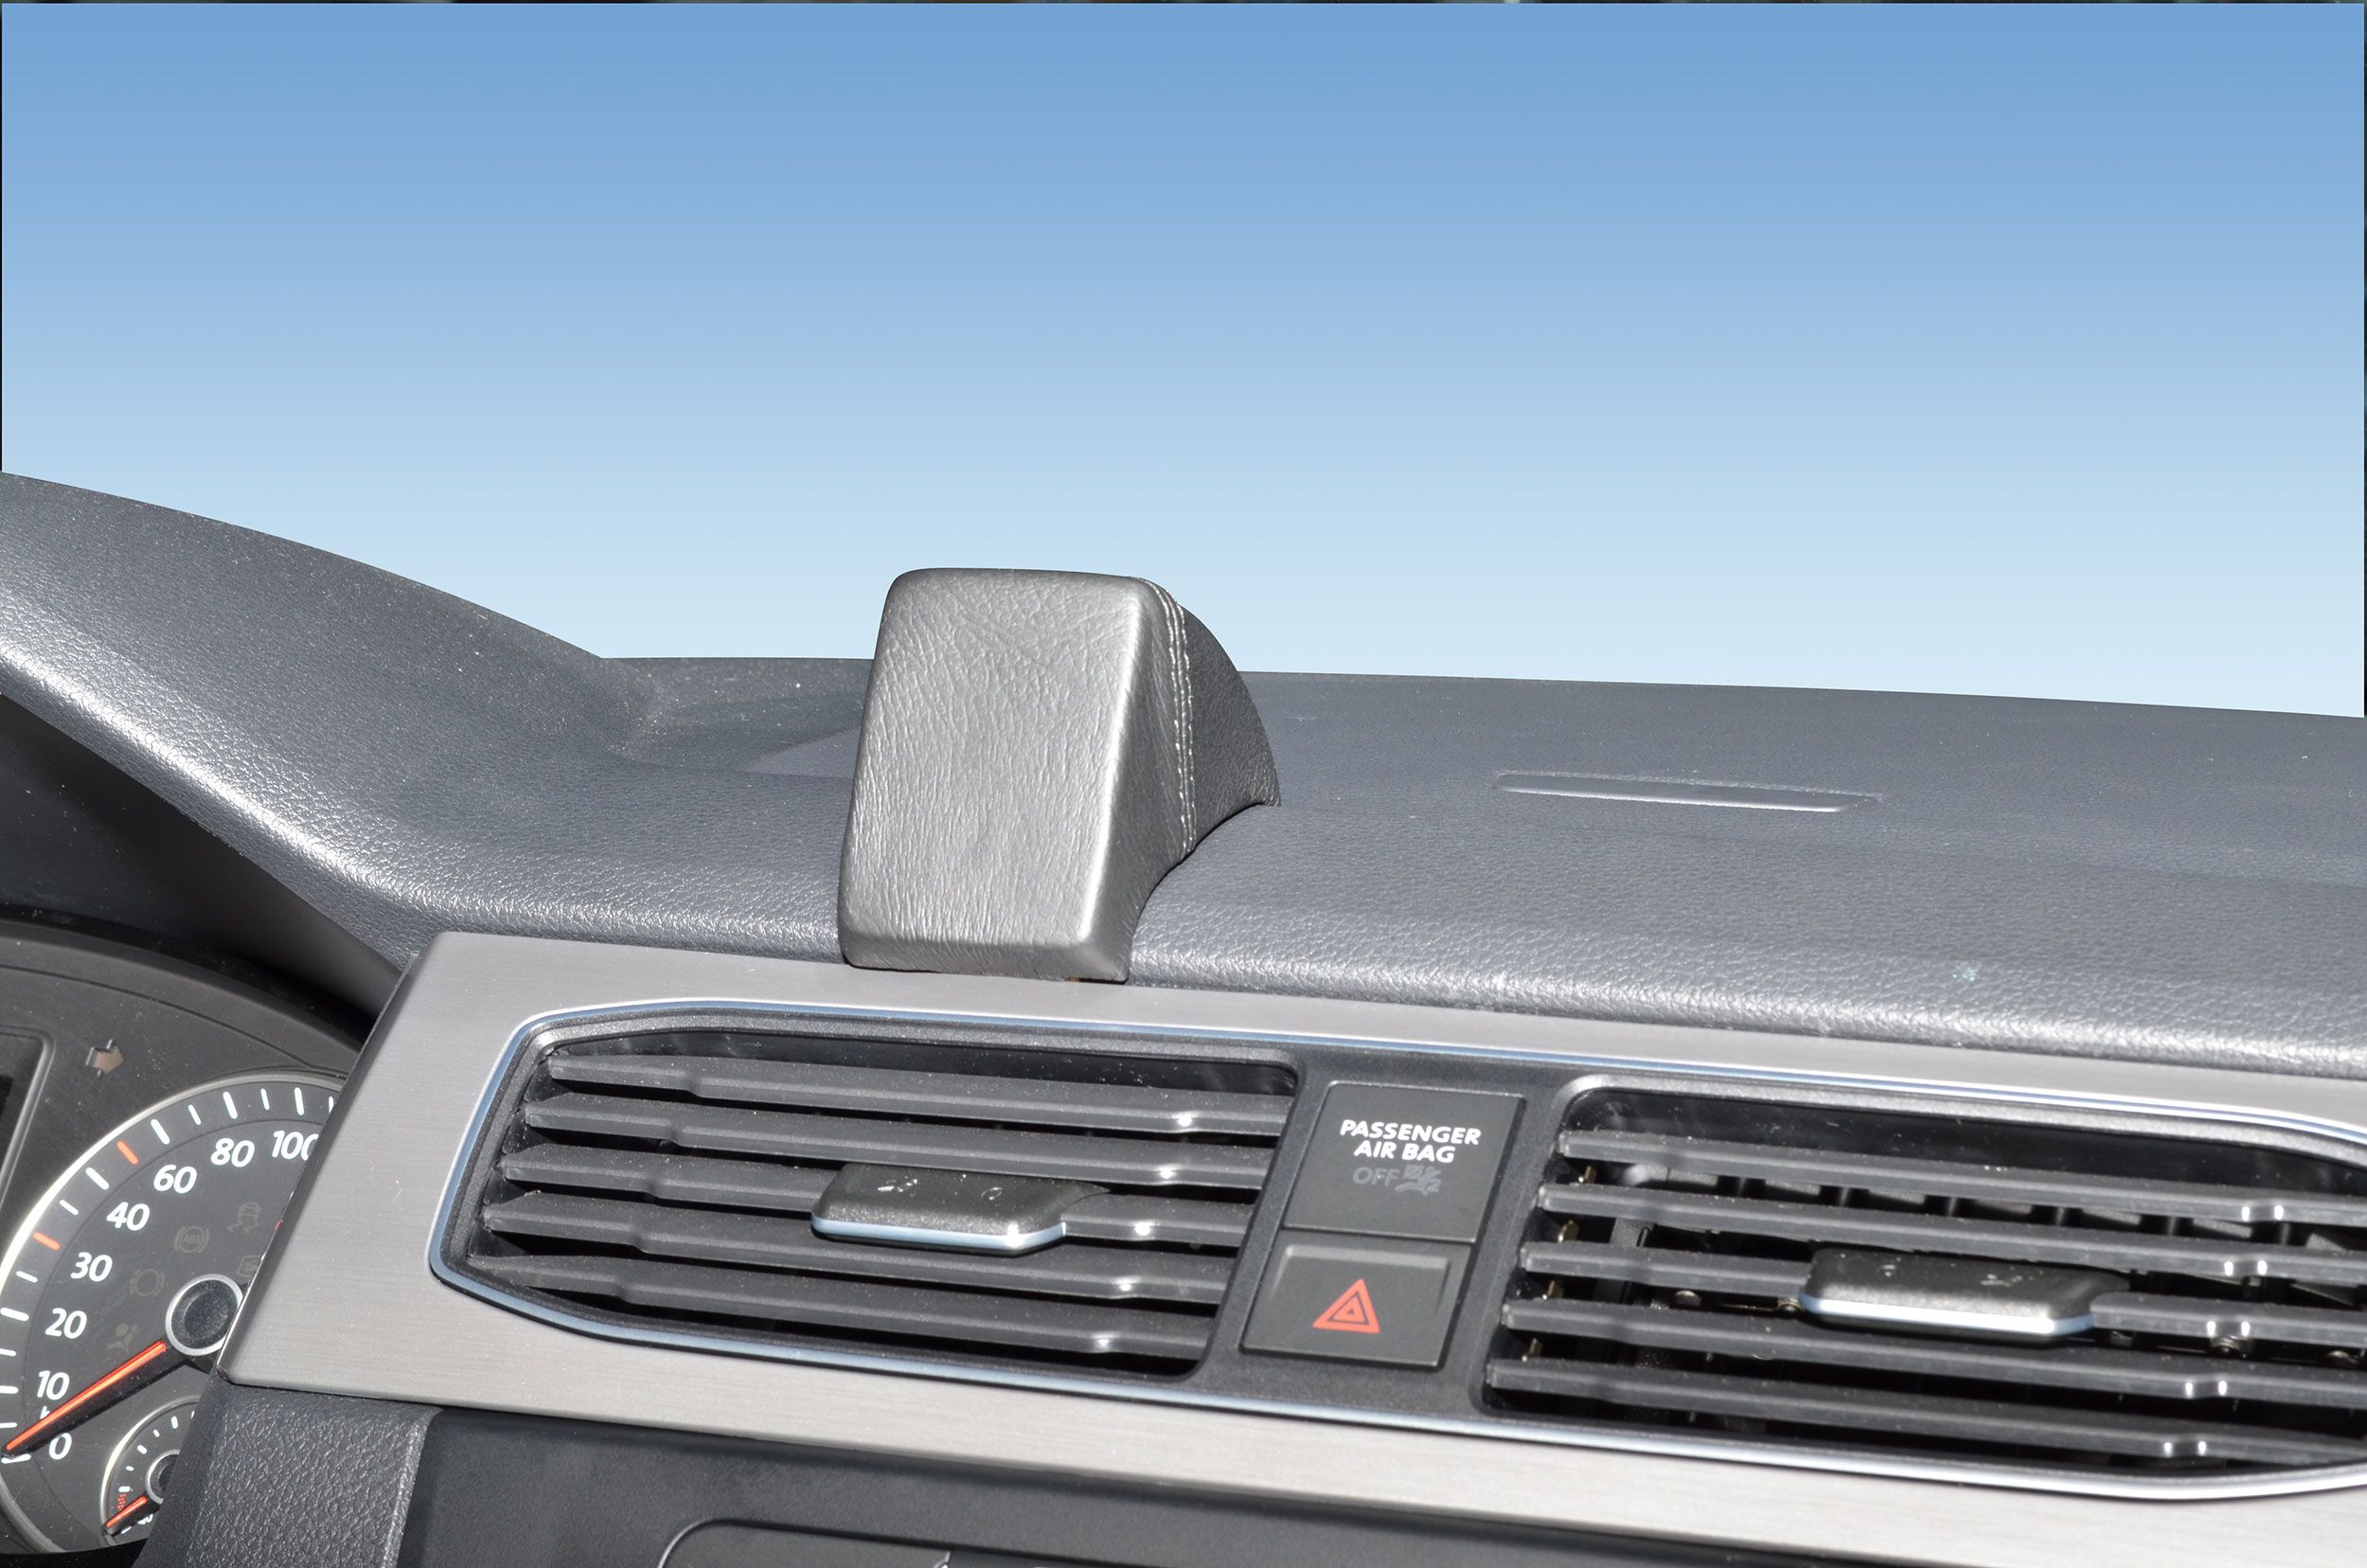 Kuda console VW Caddy (met deksel) 2015-2019 NAVI